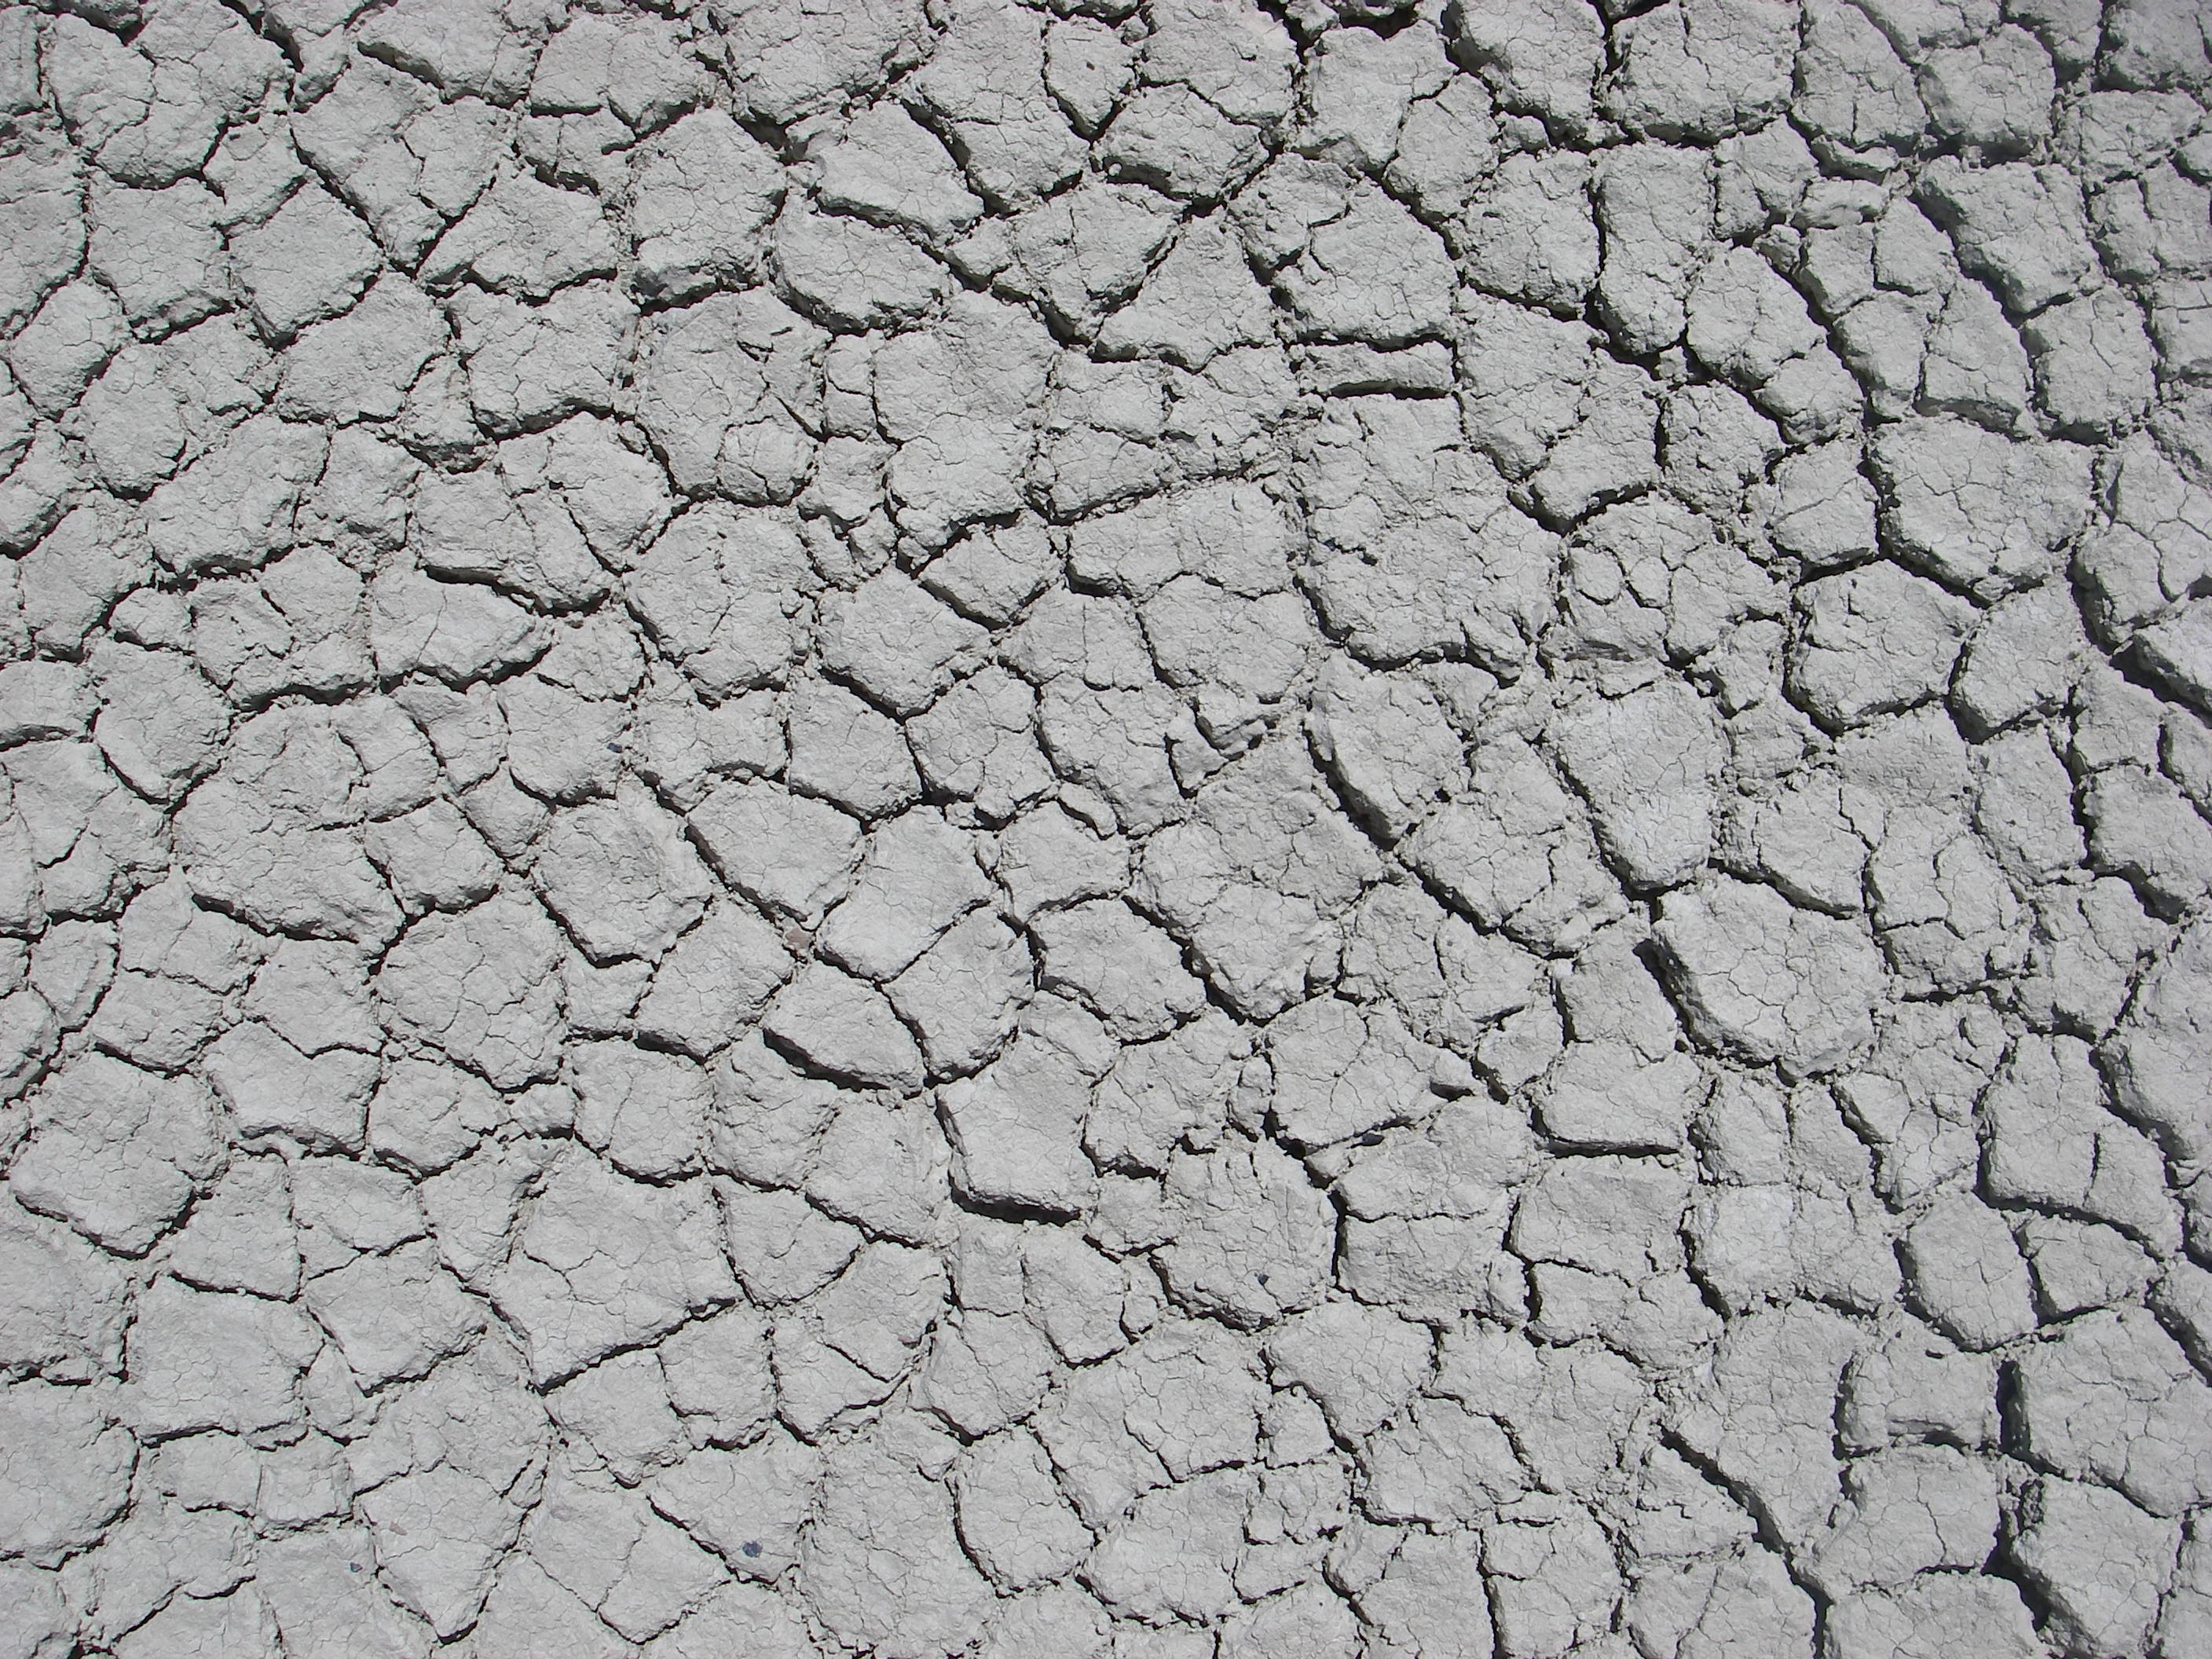 Cracked mud texture photo